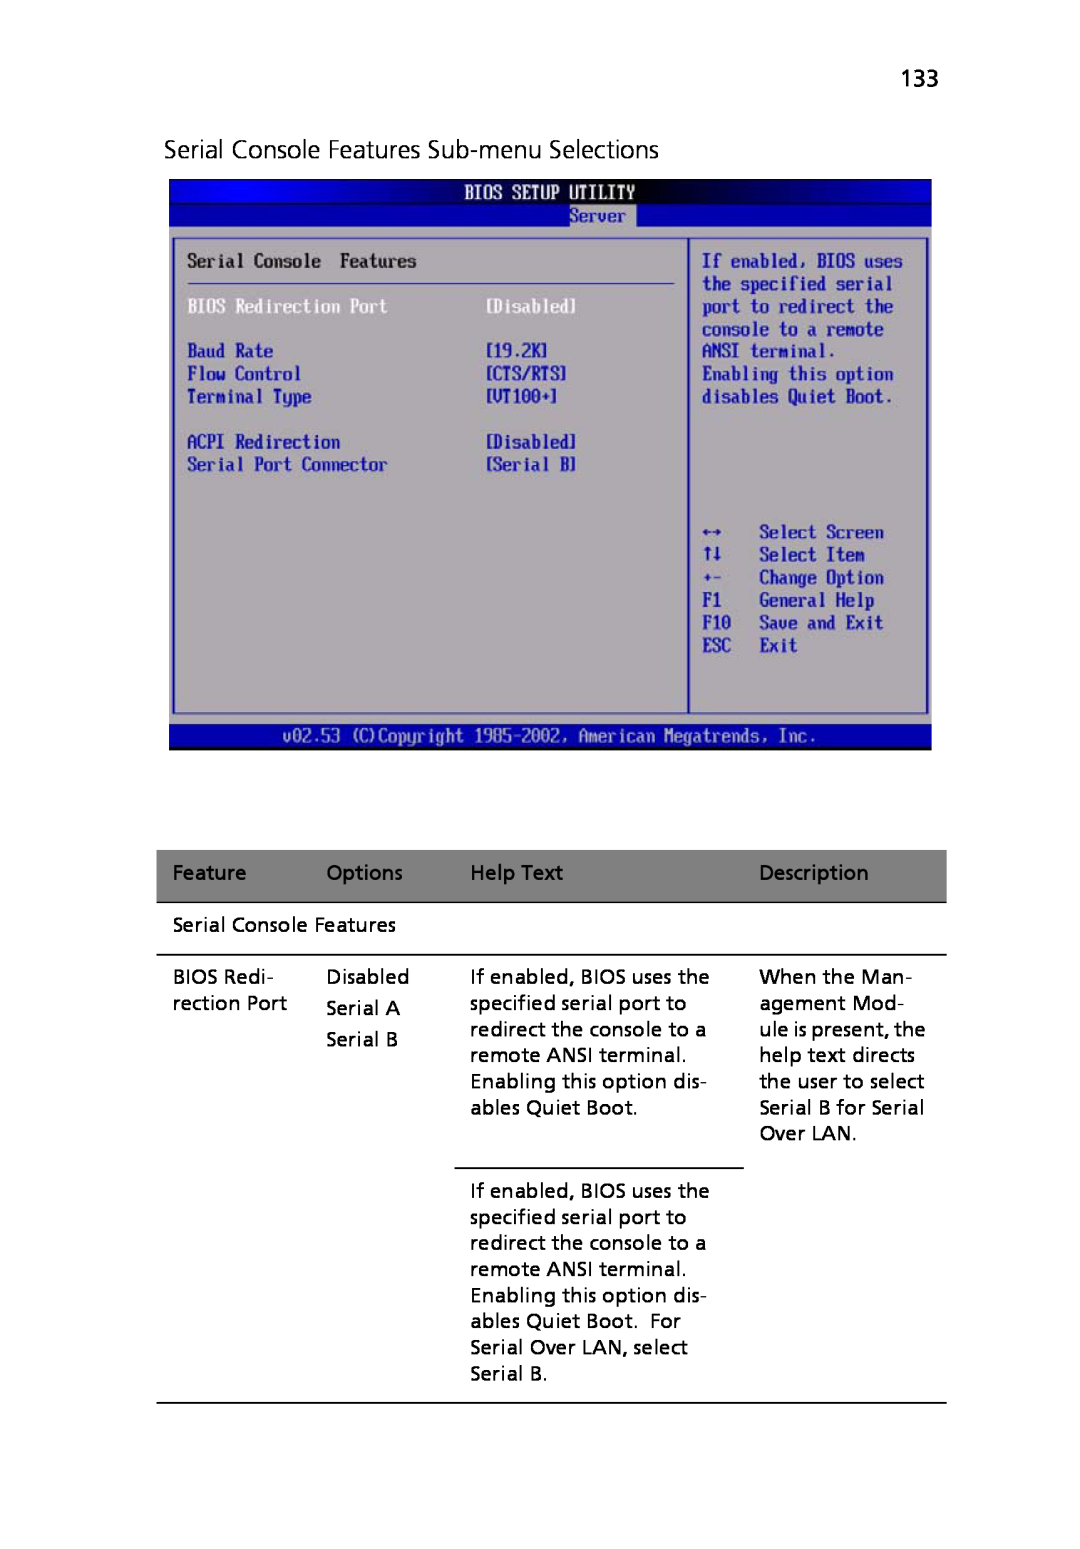 Acer Altos R710 manual Serial Console Features Sub-menu Selections, Options, Help Text, Description 